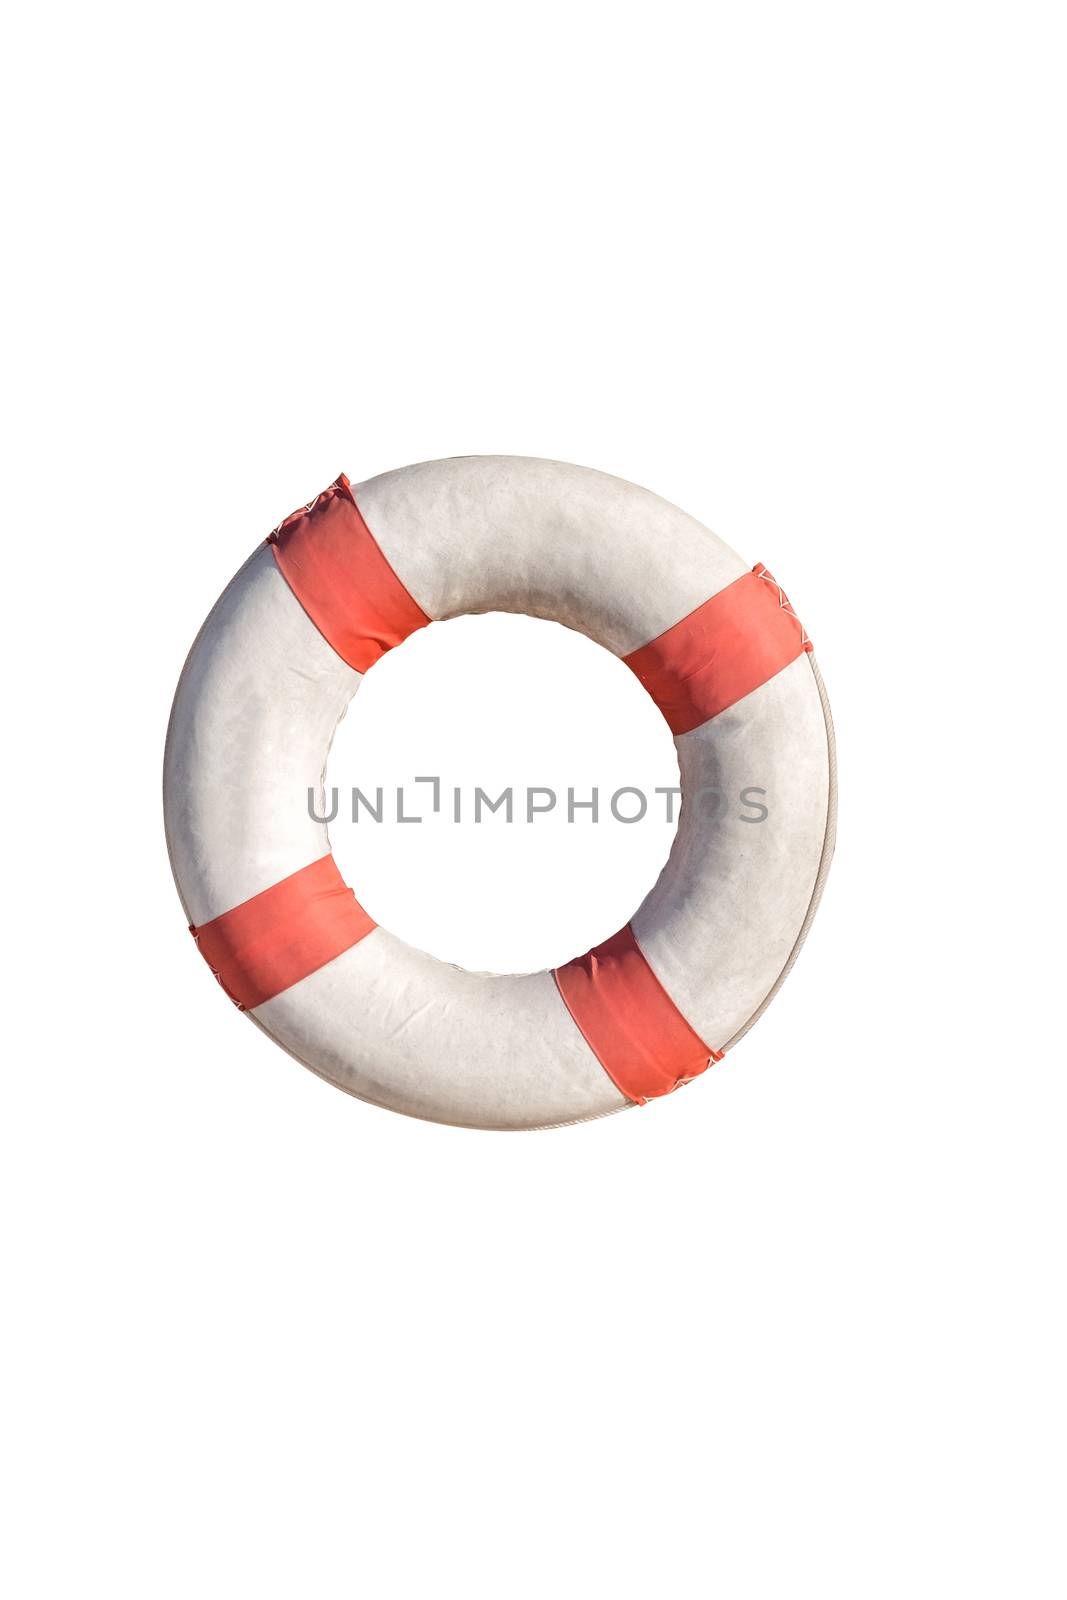 Life buoy on white isolate by Surasak